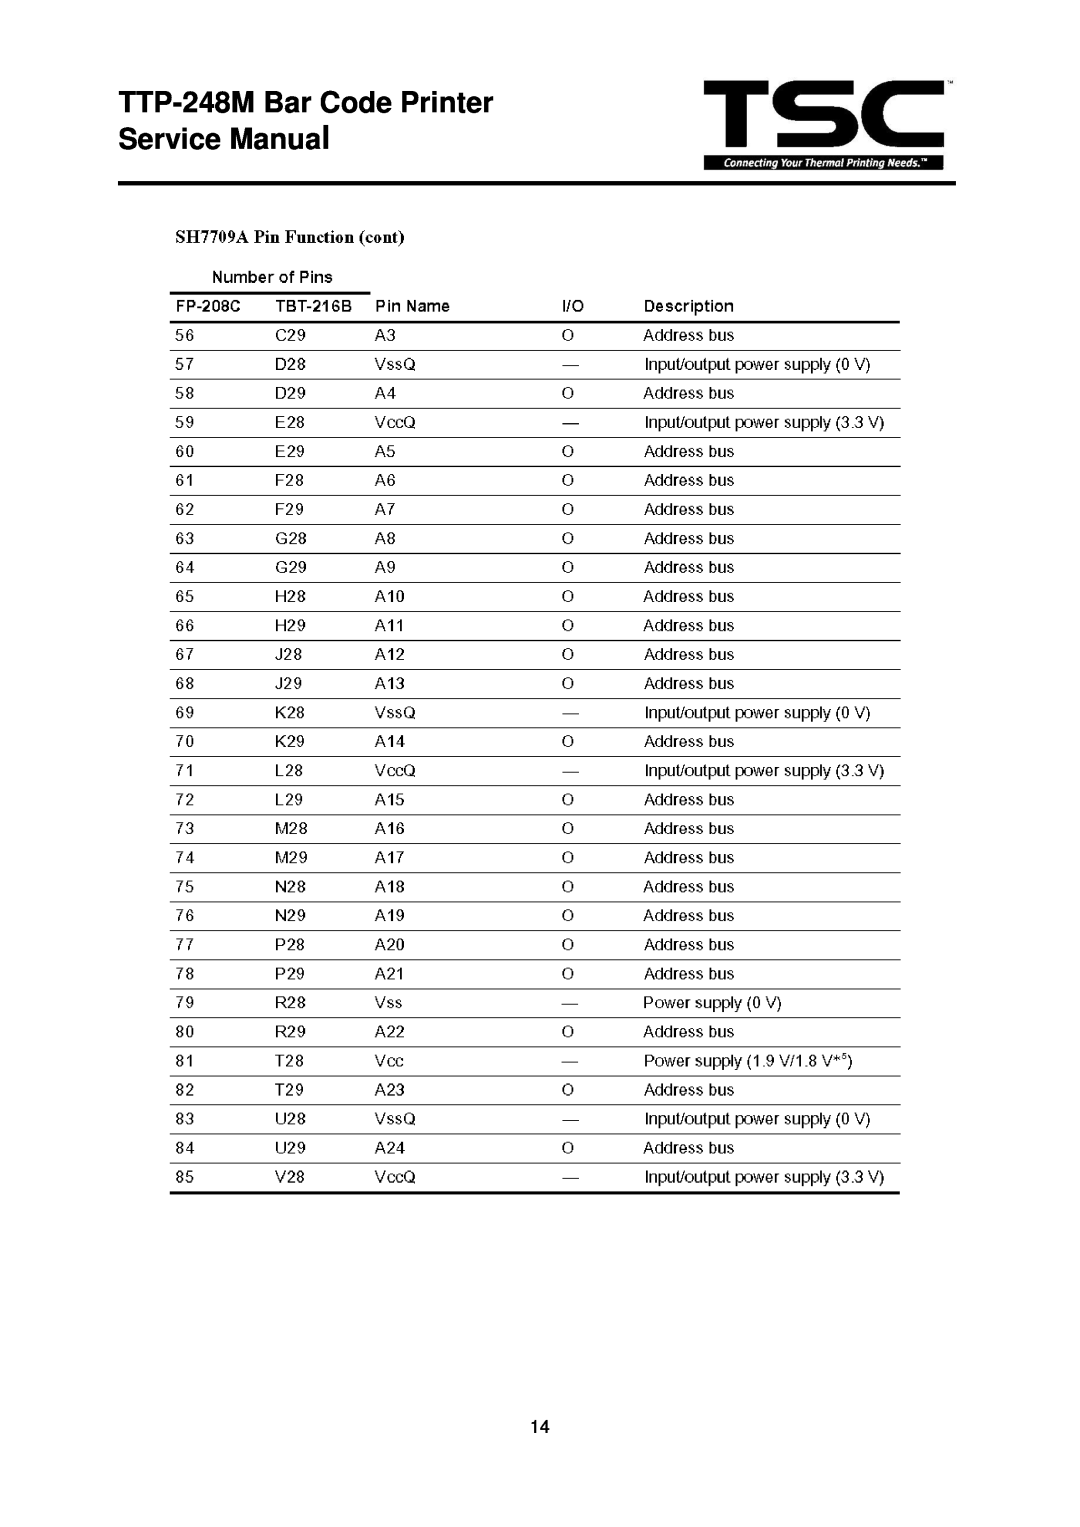 The Speaker Company TTP 248M service manual TTP-248M Bar Code Printer Service Manual 